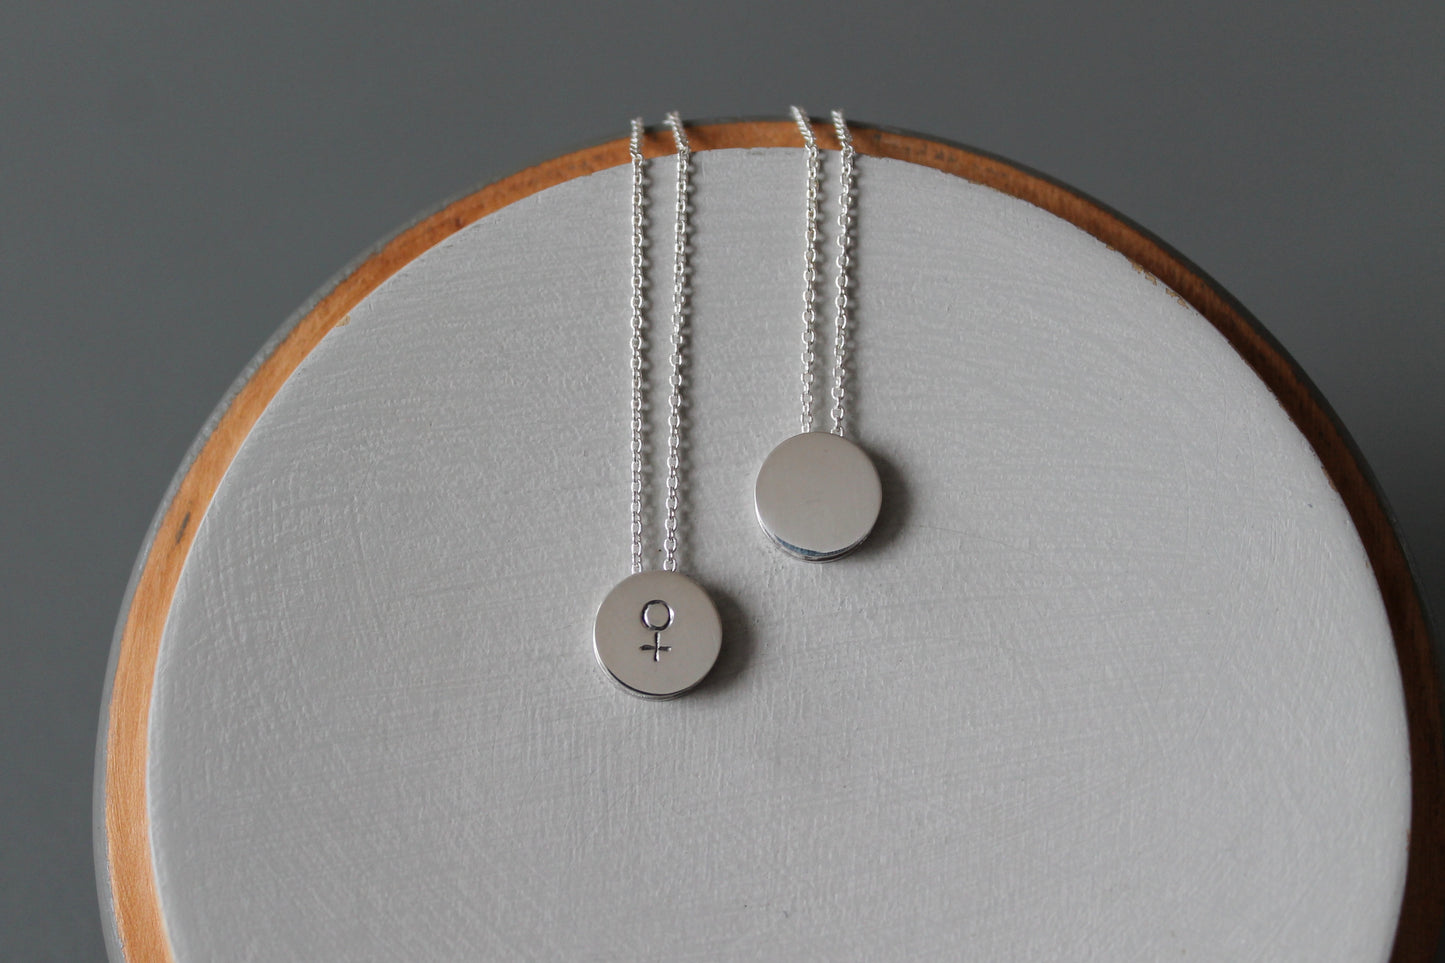 minimalist silver necklace with venus symbol